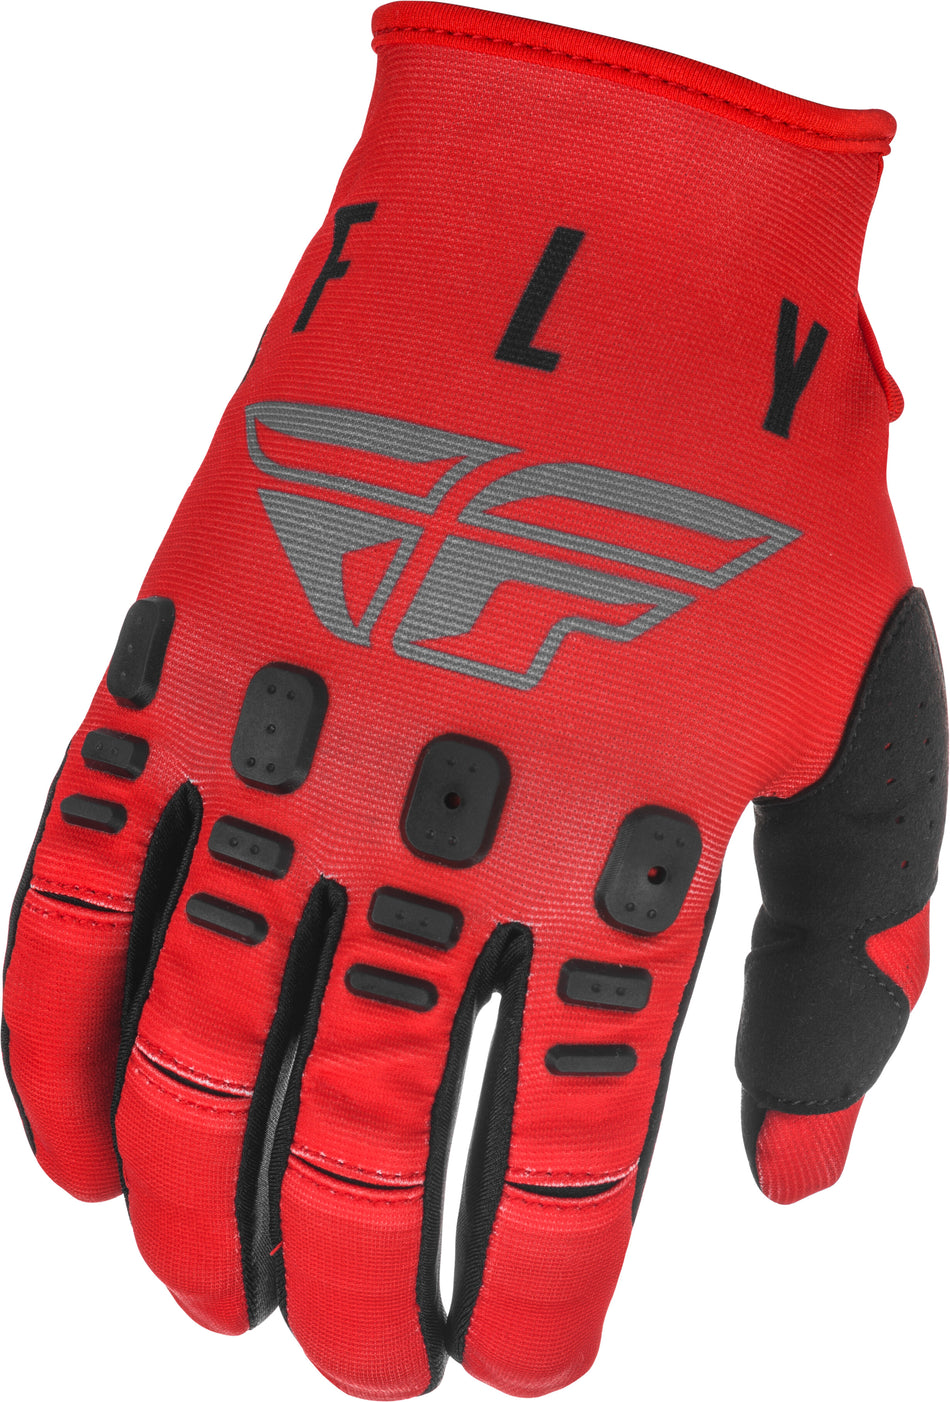 FLY RACING Kinetic K121 Gloves Red/Grey/Black Sz 11 374-41211